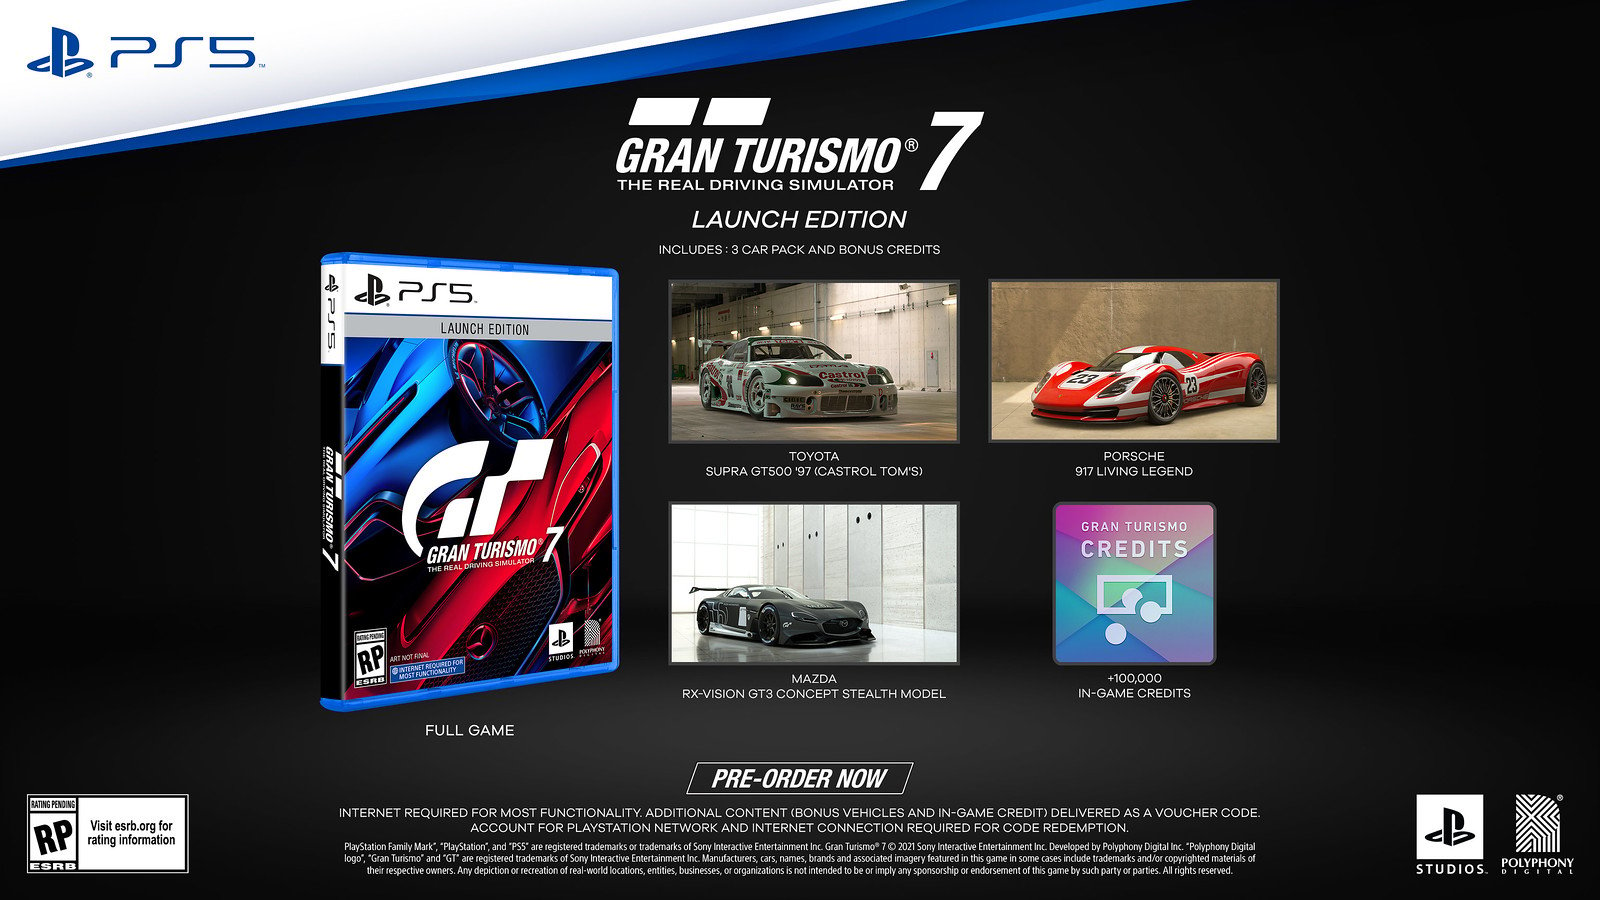 Gran Turismo 7 “25th Anniversary Edition” and Pre-Order Details